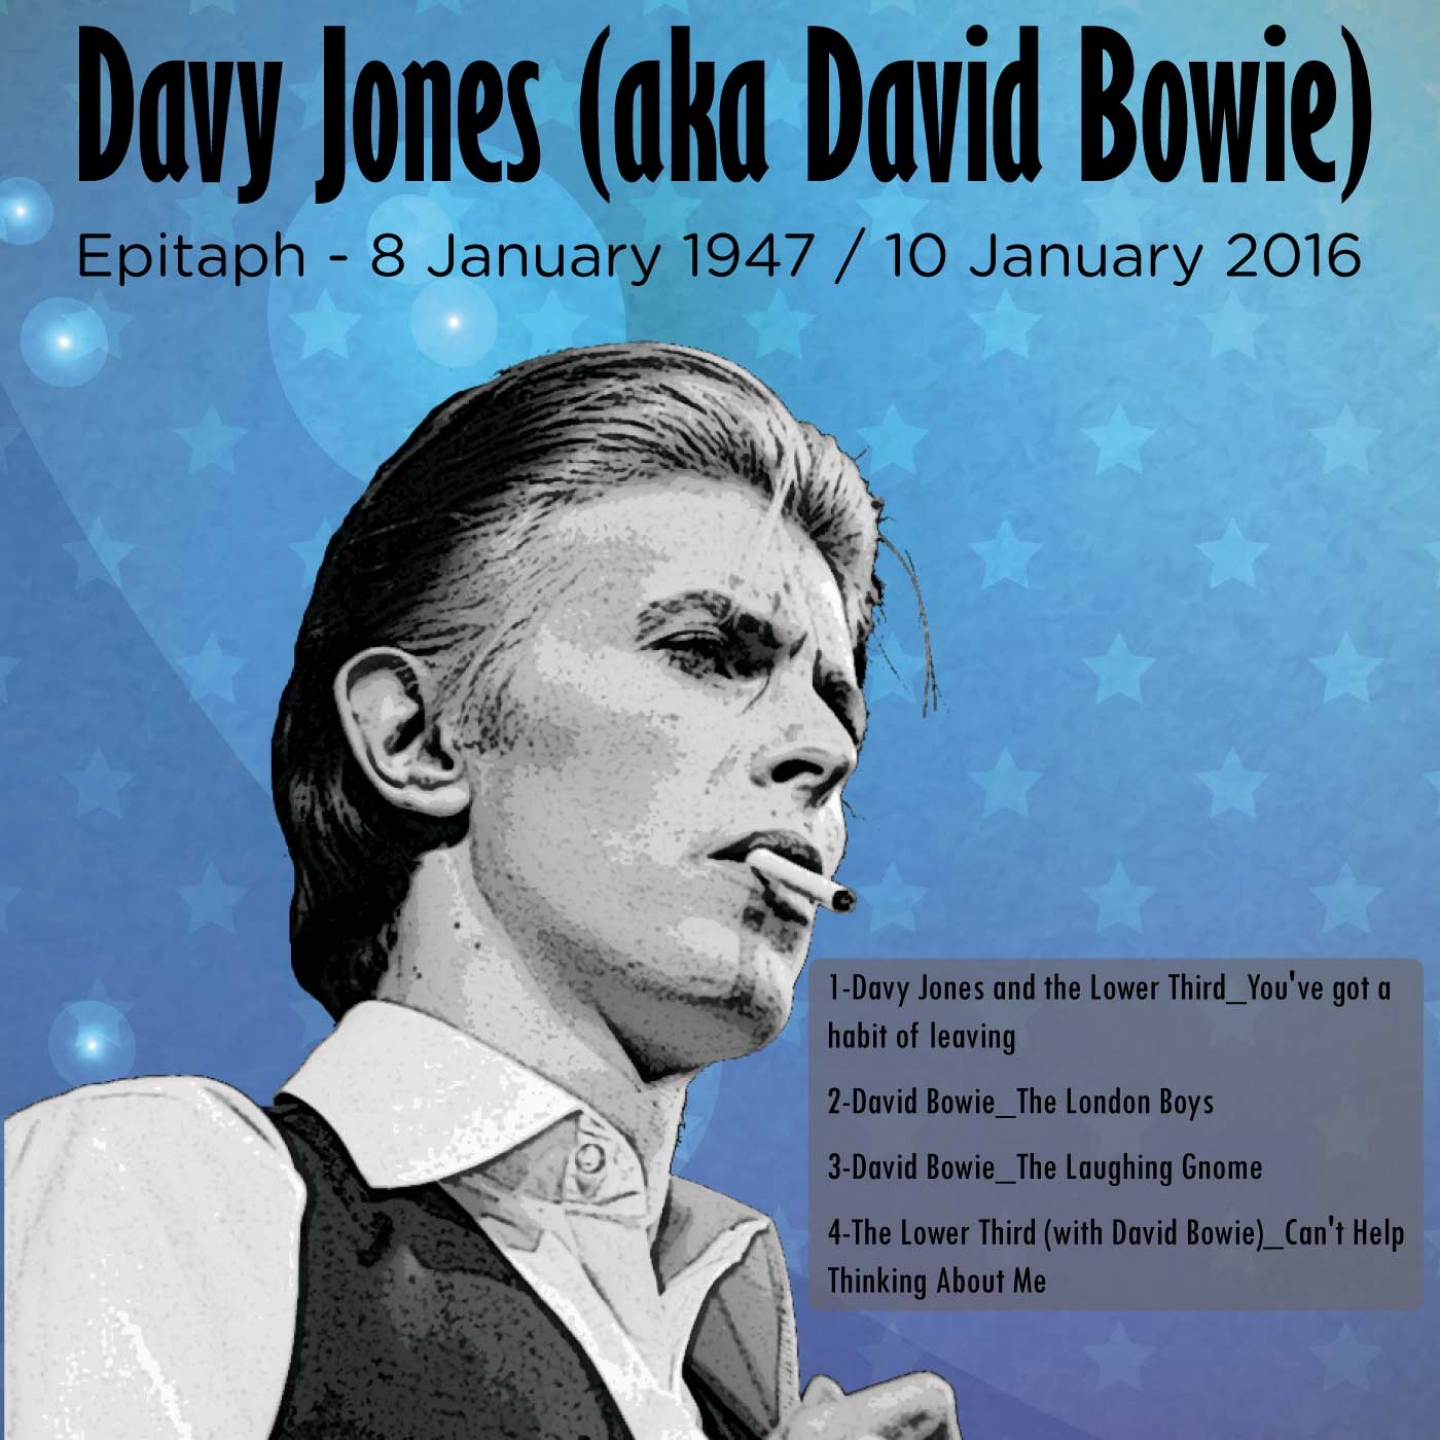 Davy Jones (aka David Bowie) (Epitaph - 8 January 1947 / 10 January 2016)